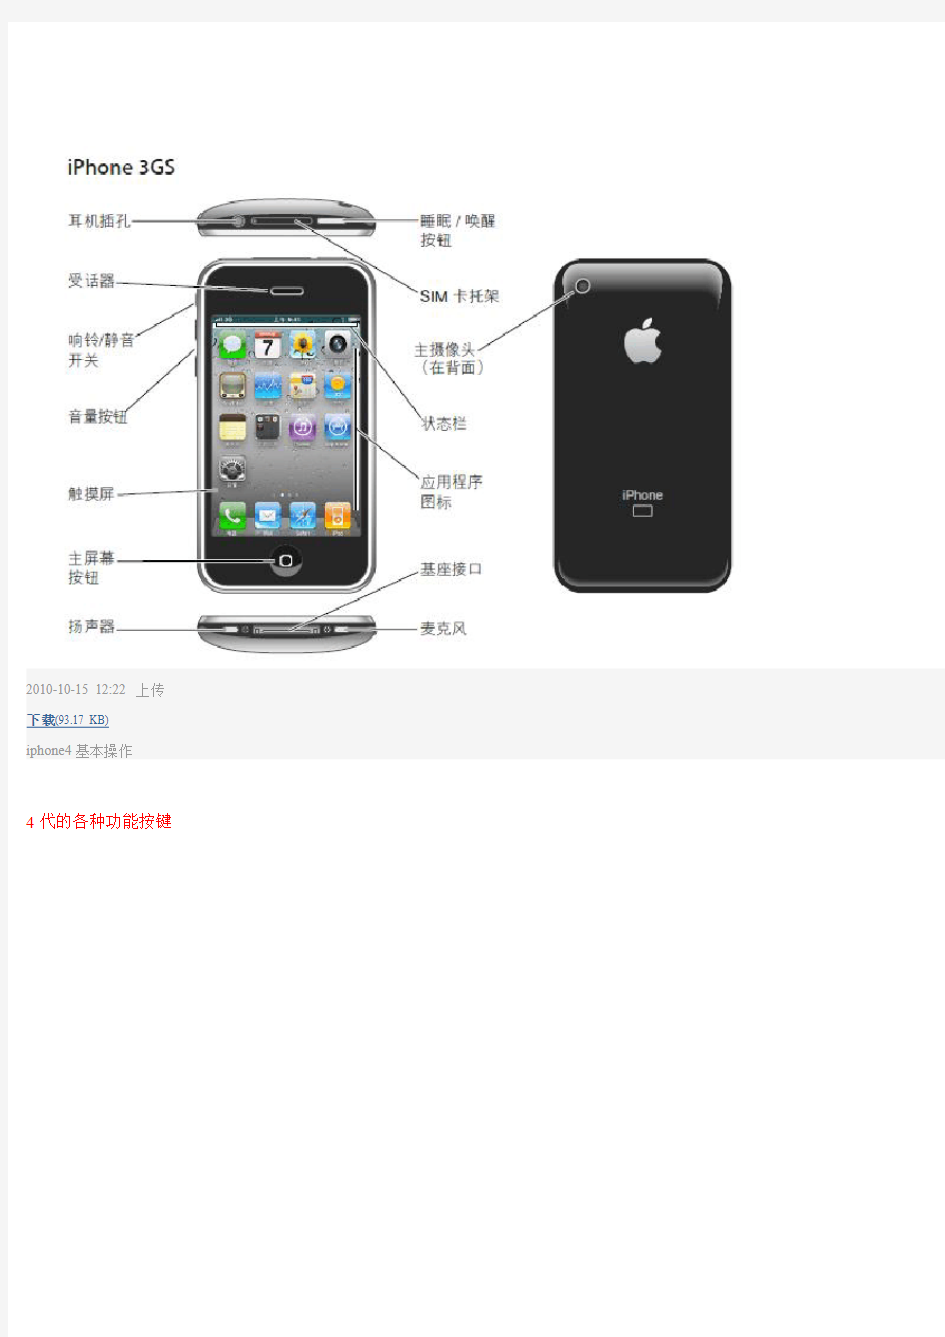 iphone4完全中文版使用手册[1]